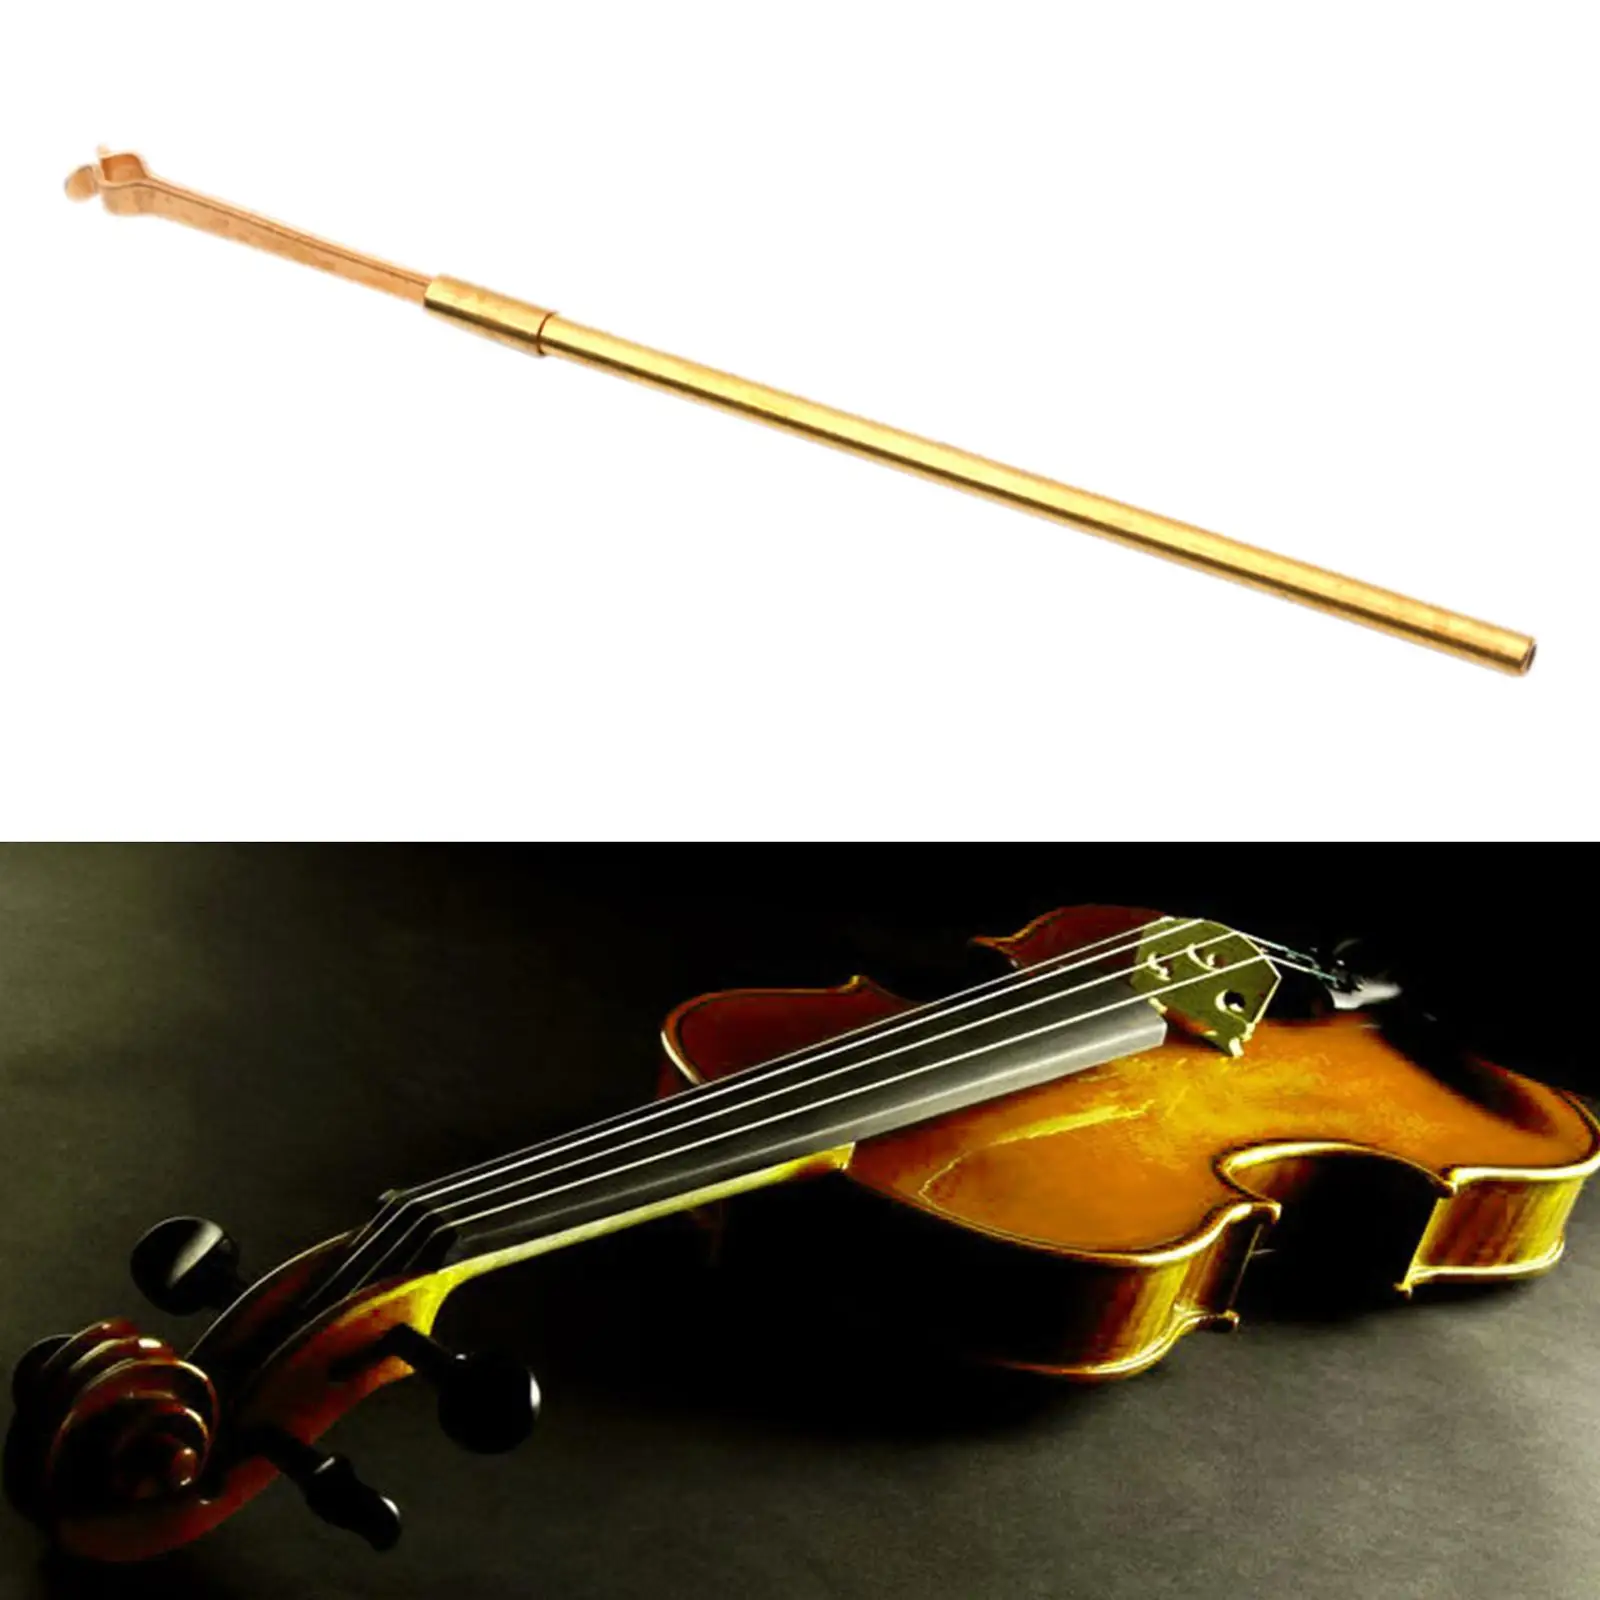 Sound Post Retriever Sound Post Adjuster Professional Violin Sound Post Setter Luthier Tool